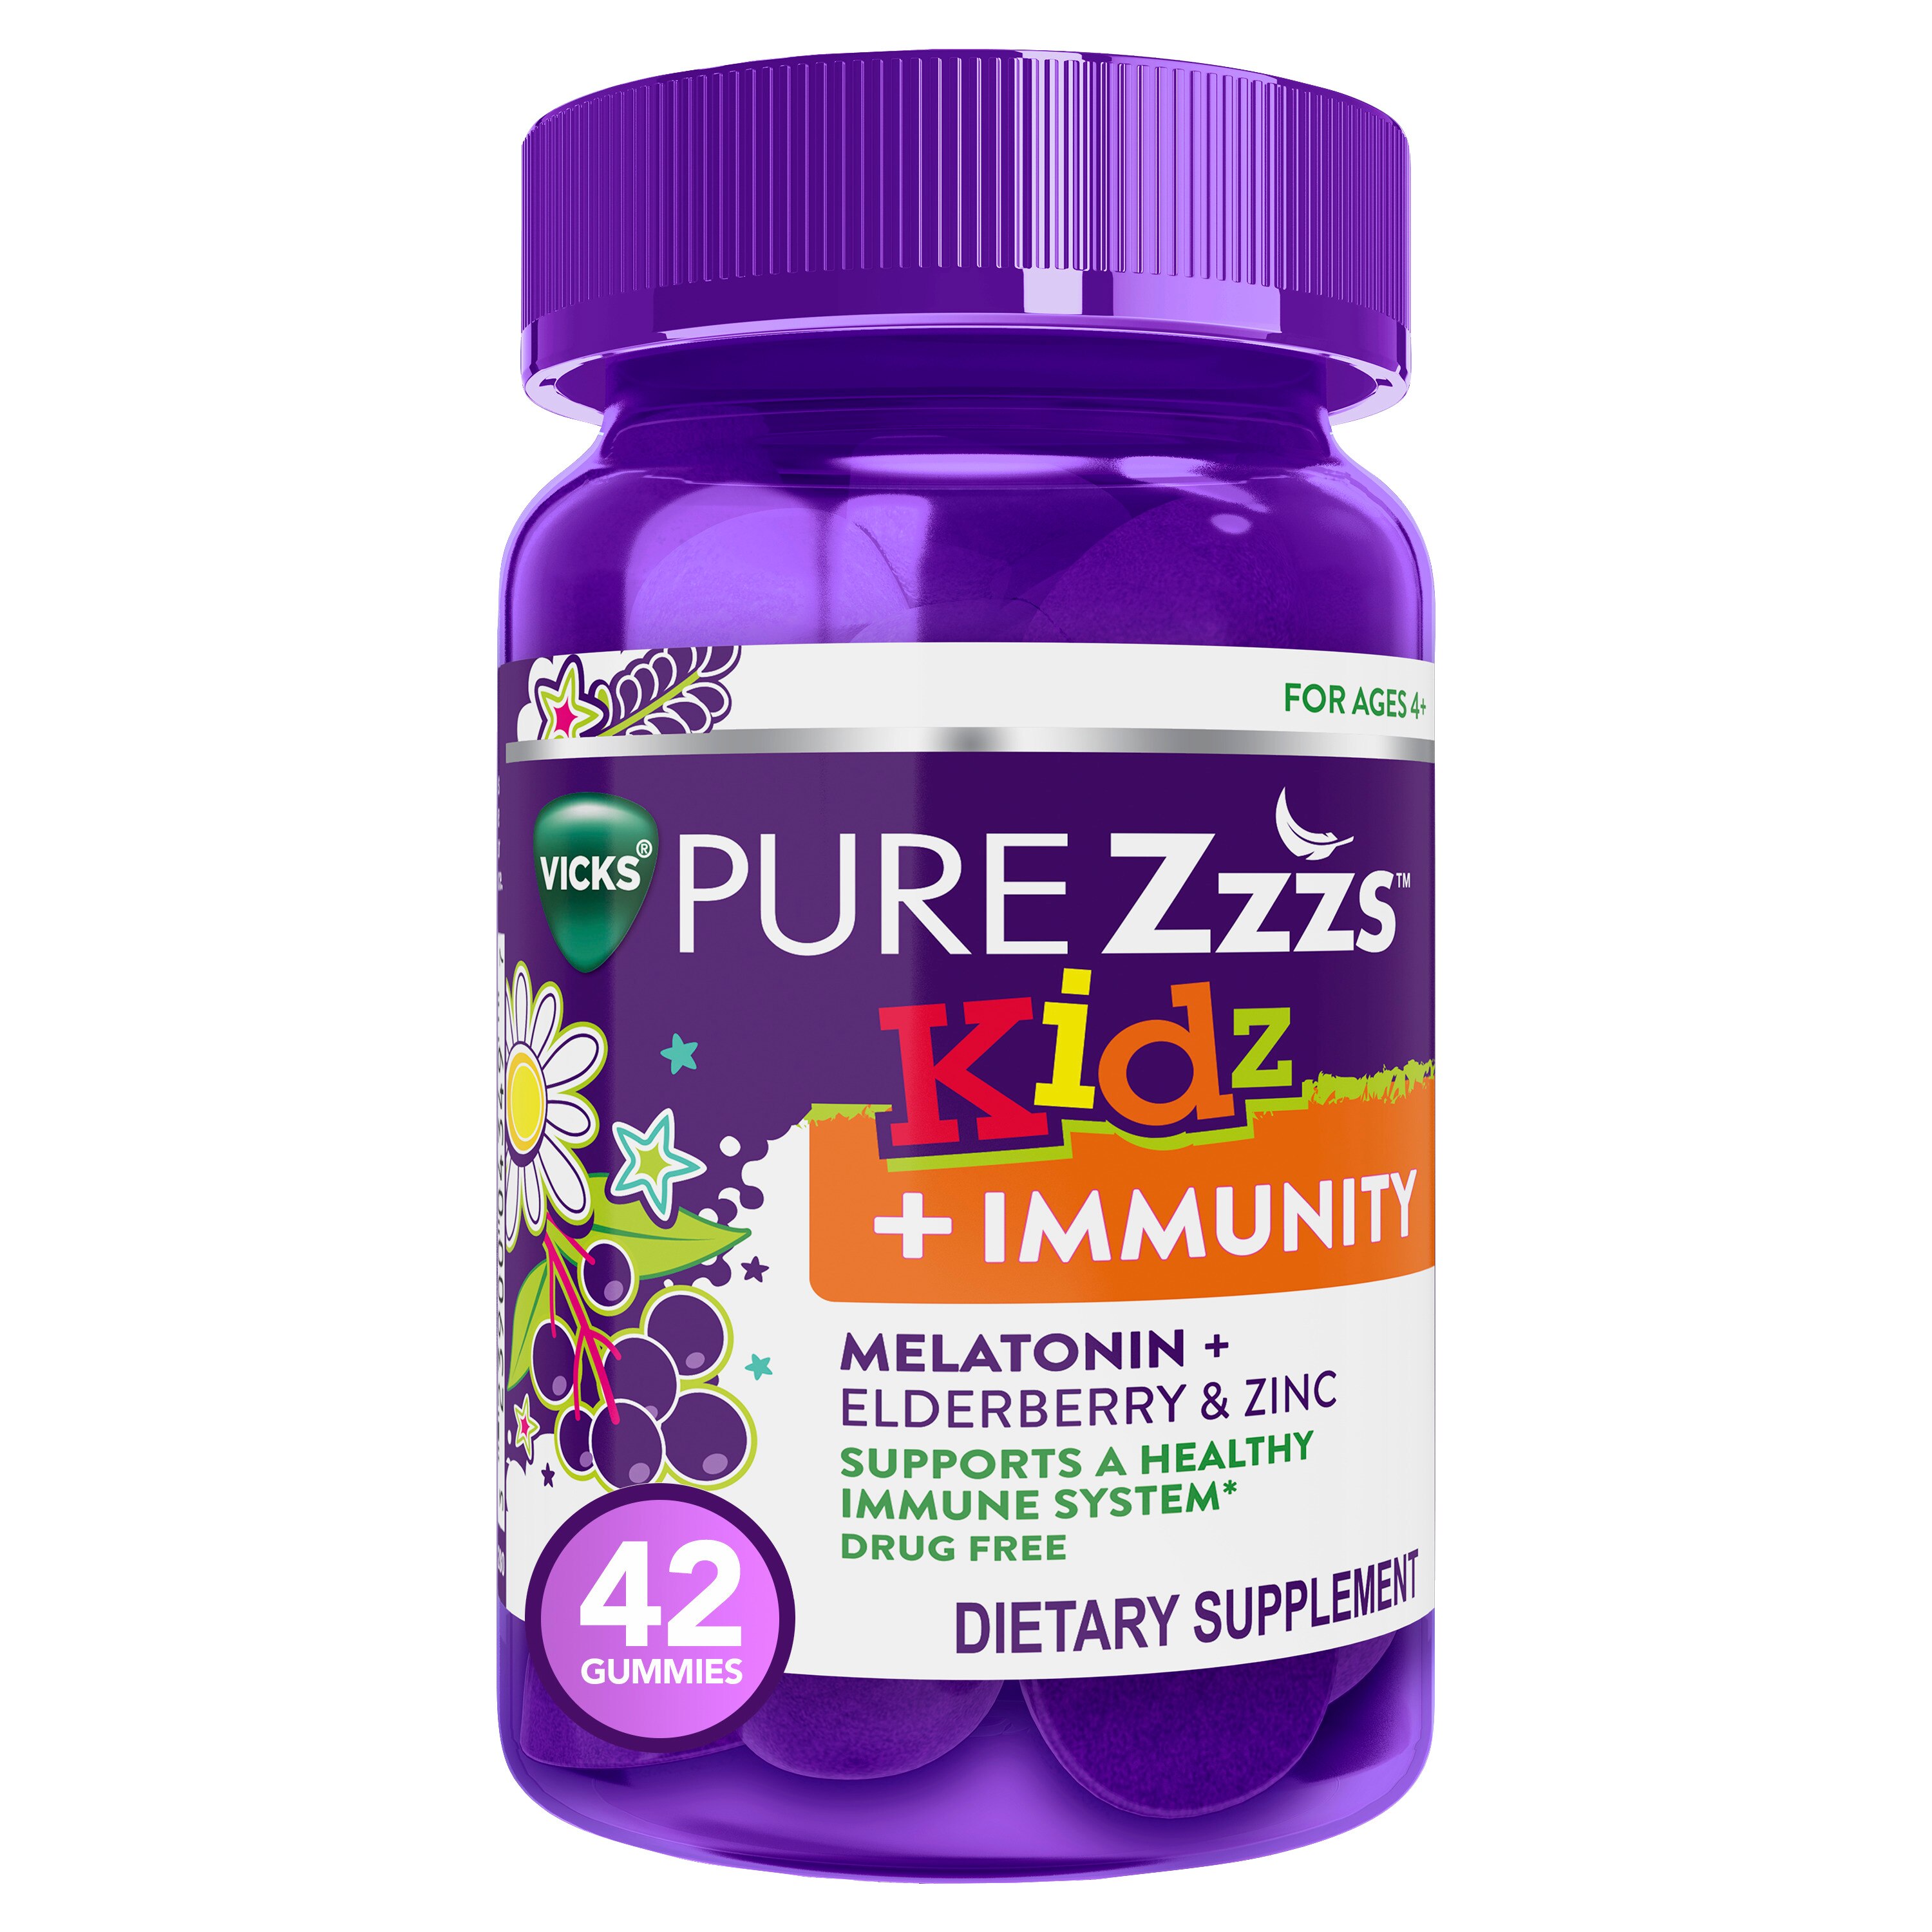 VICKS PURE Zzzs Kidz + Immunity, Melatonin Sleep Aid Gummies for Kids, Natural Berry Flavor